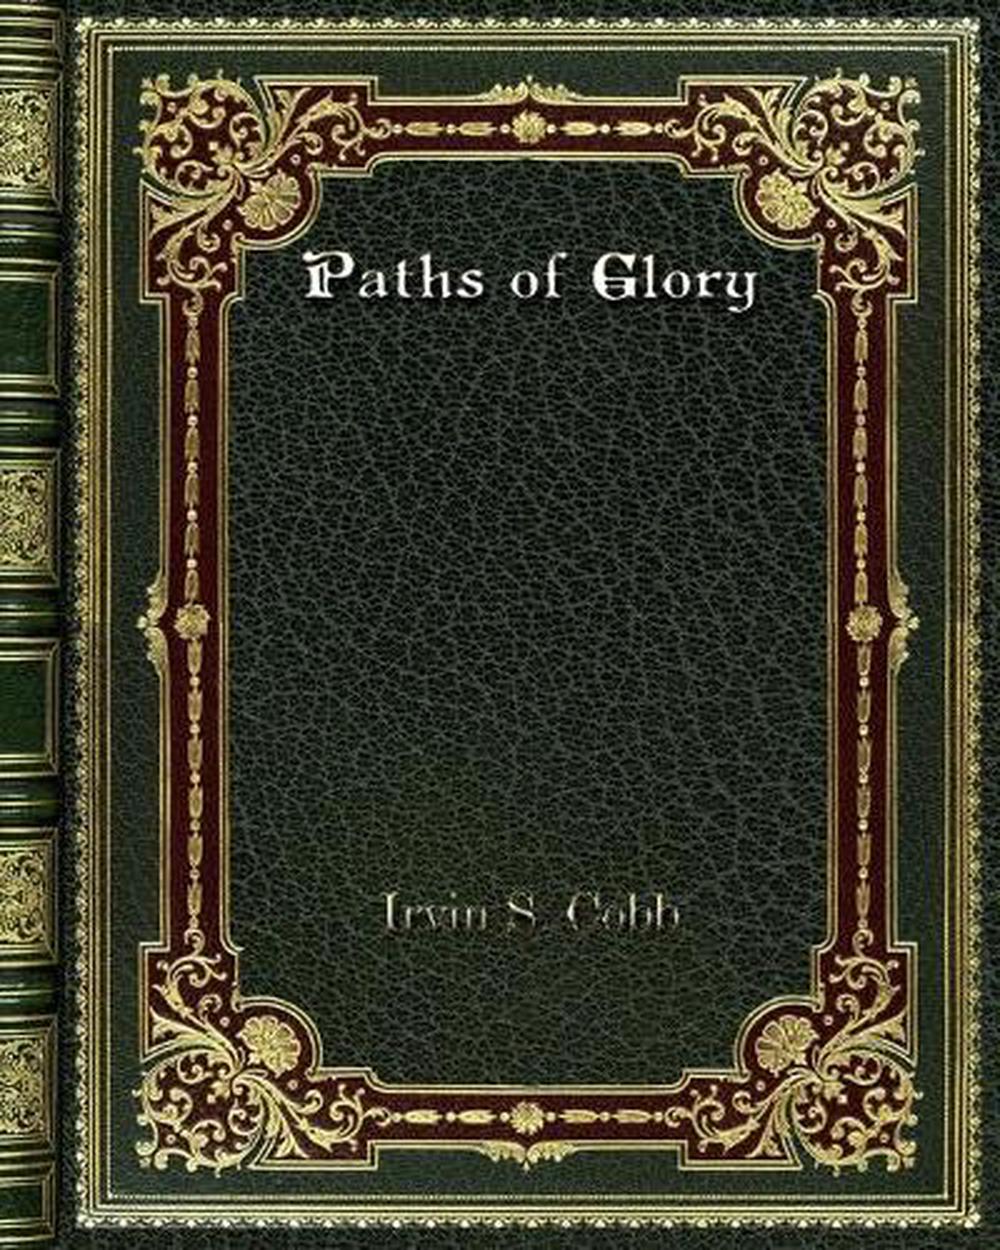 paths of glory book humphrey cobb